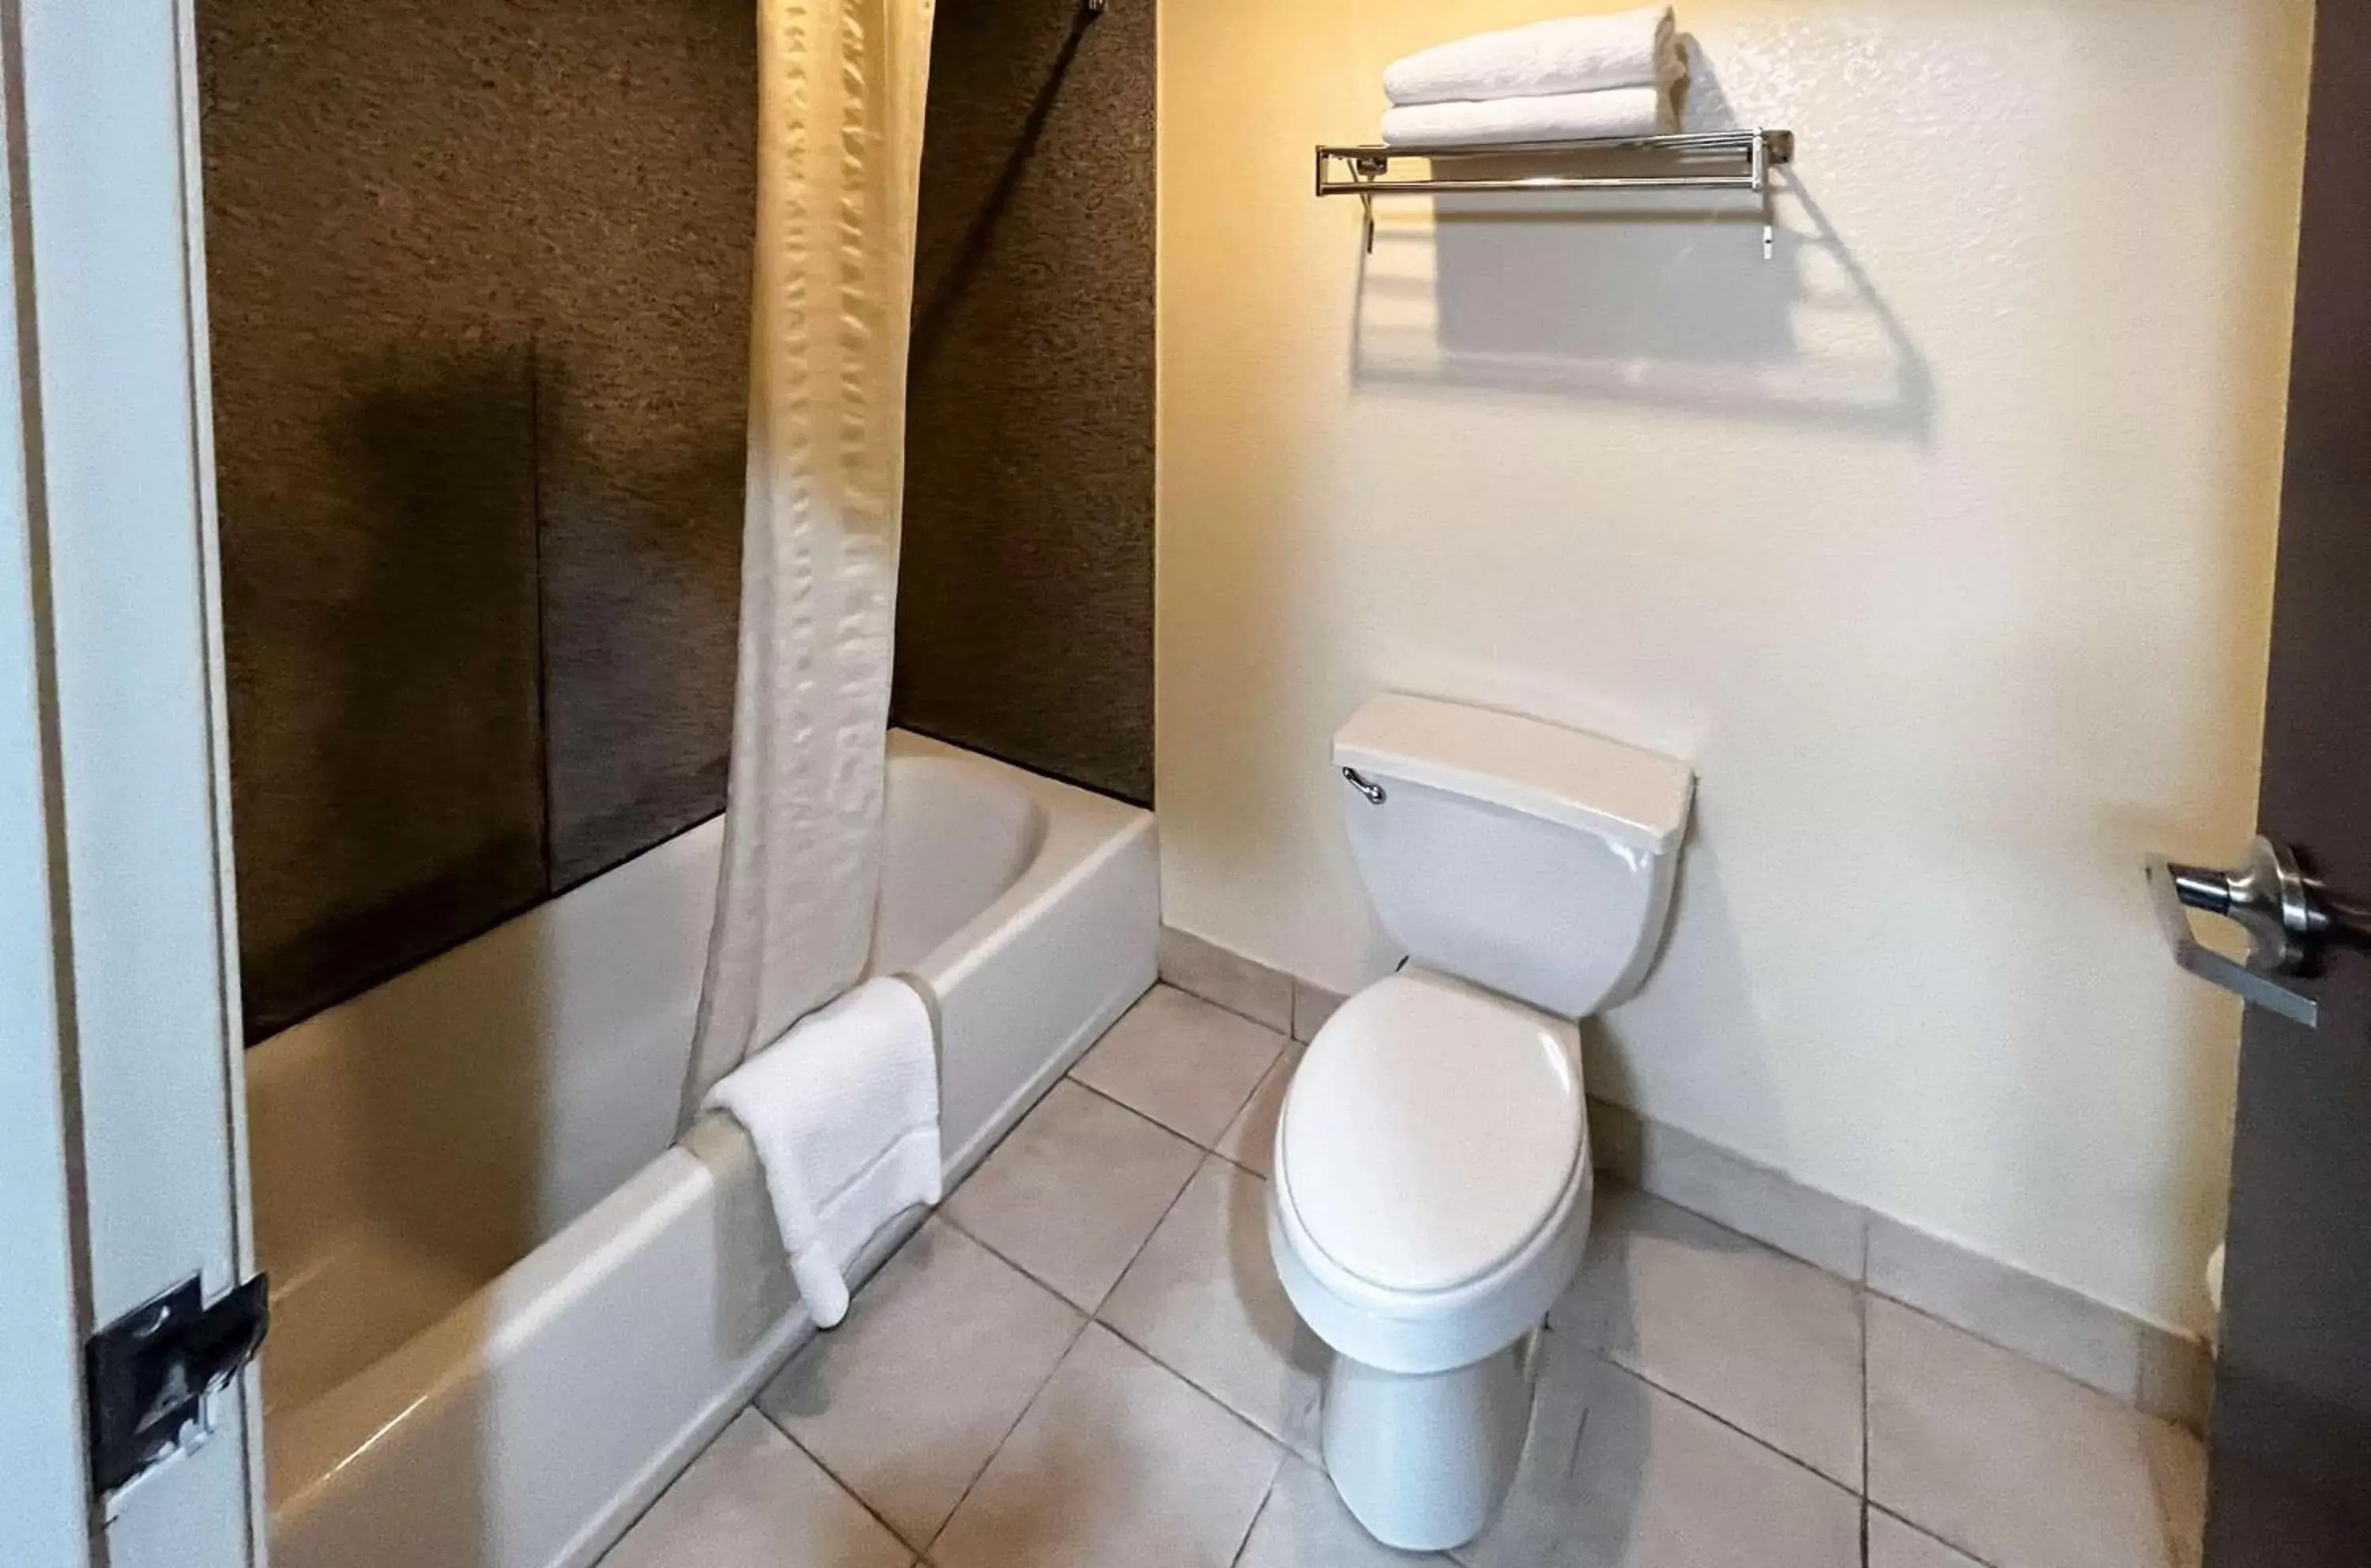 Bathroom in Executive Inn & Suites Breaux Bridge, LA